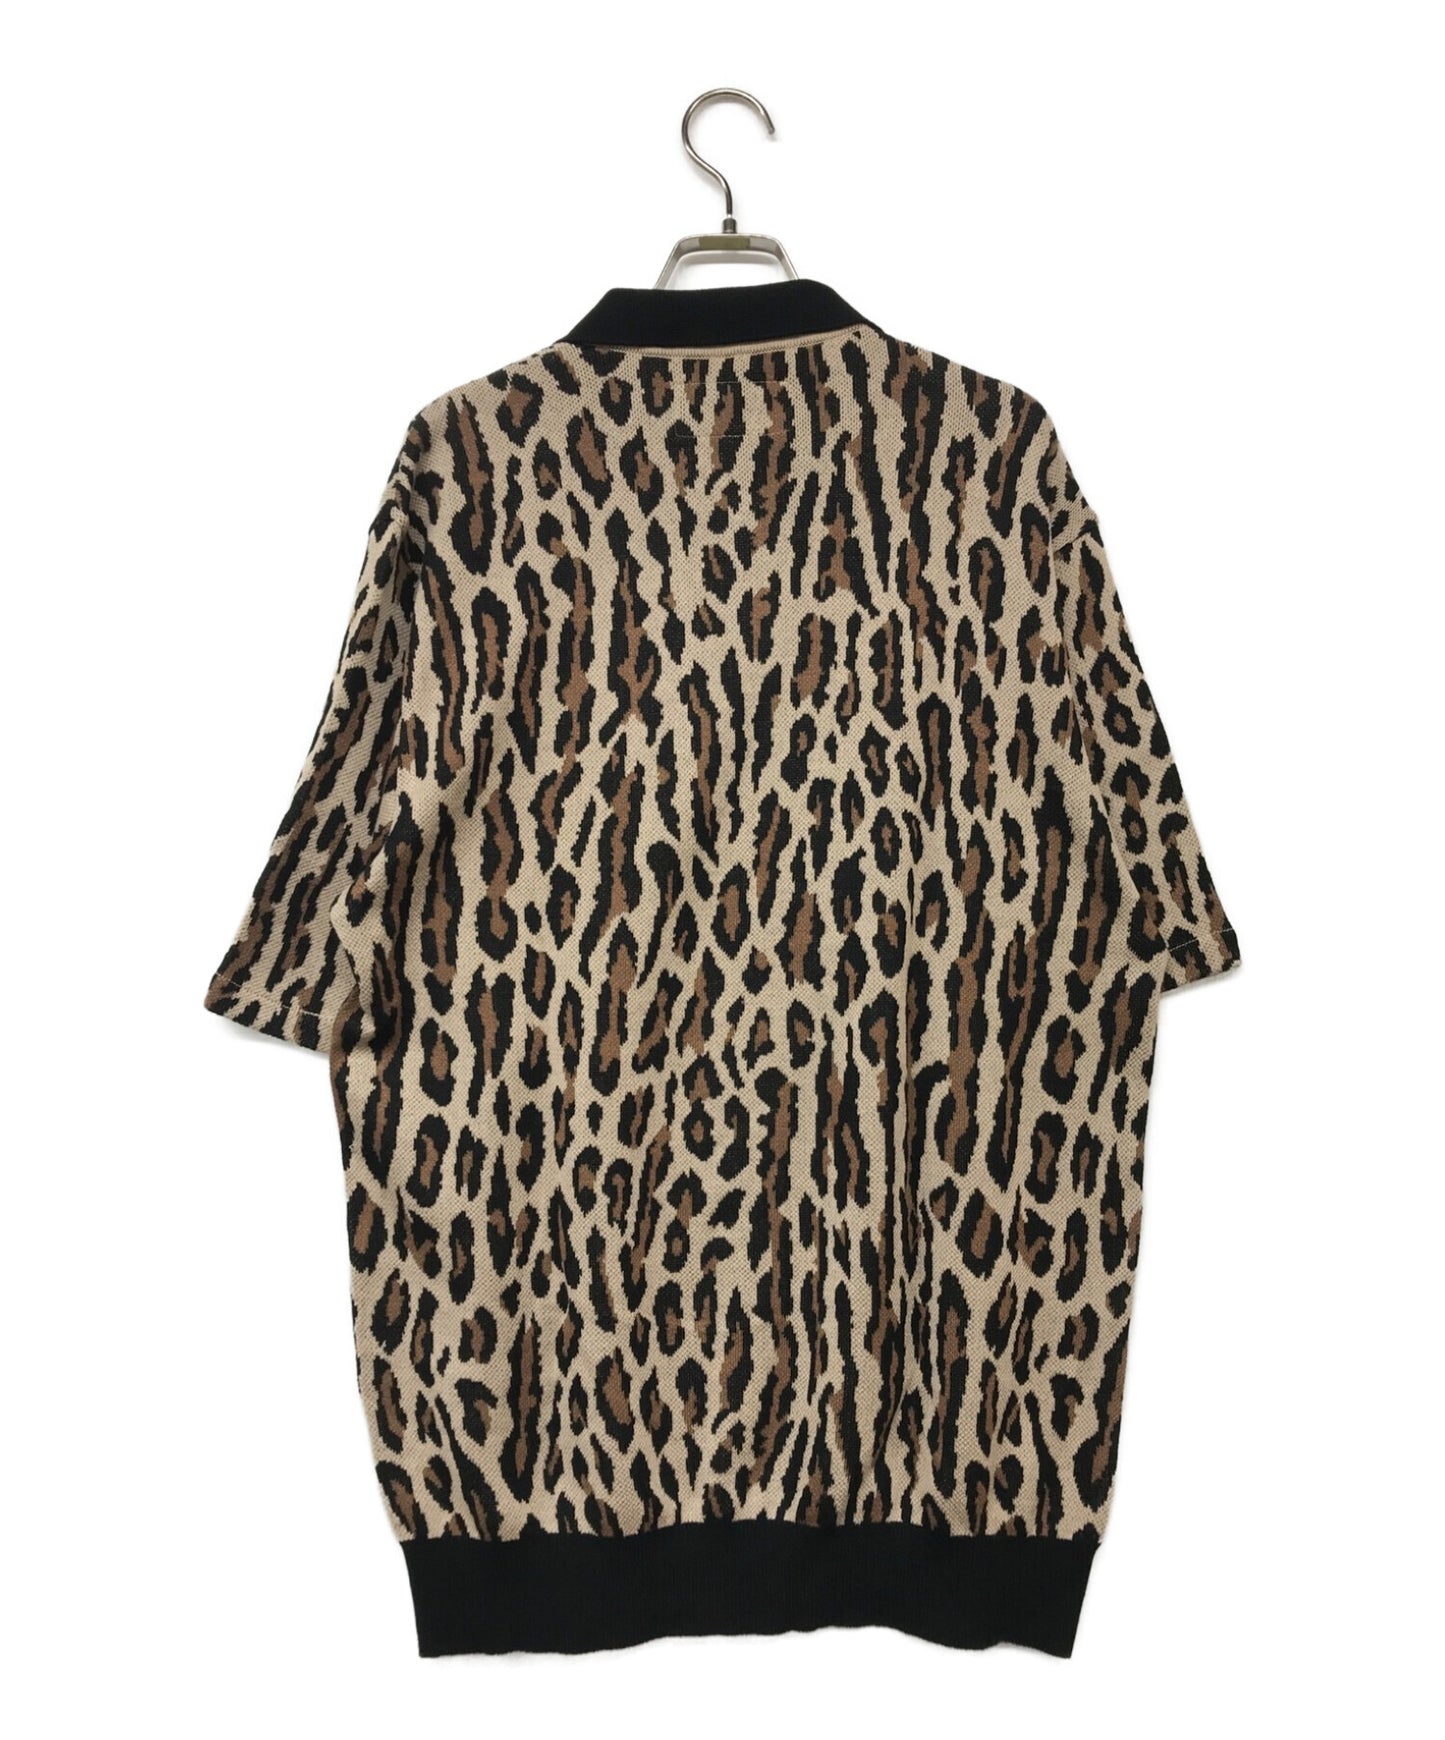 Wacko Maria Leopard编织Jaquard Polo衬衫 /豹纹Jacquard Polo